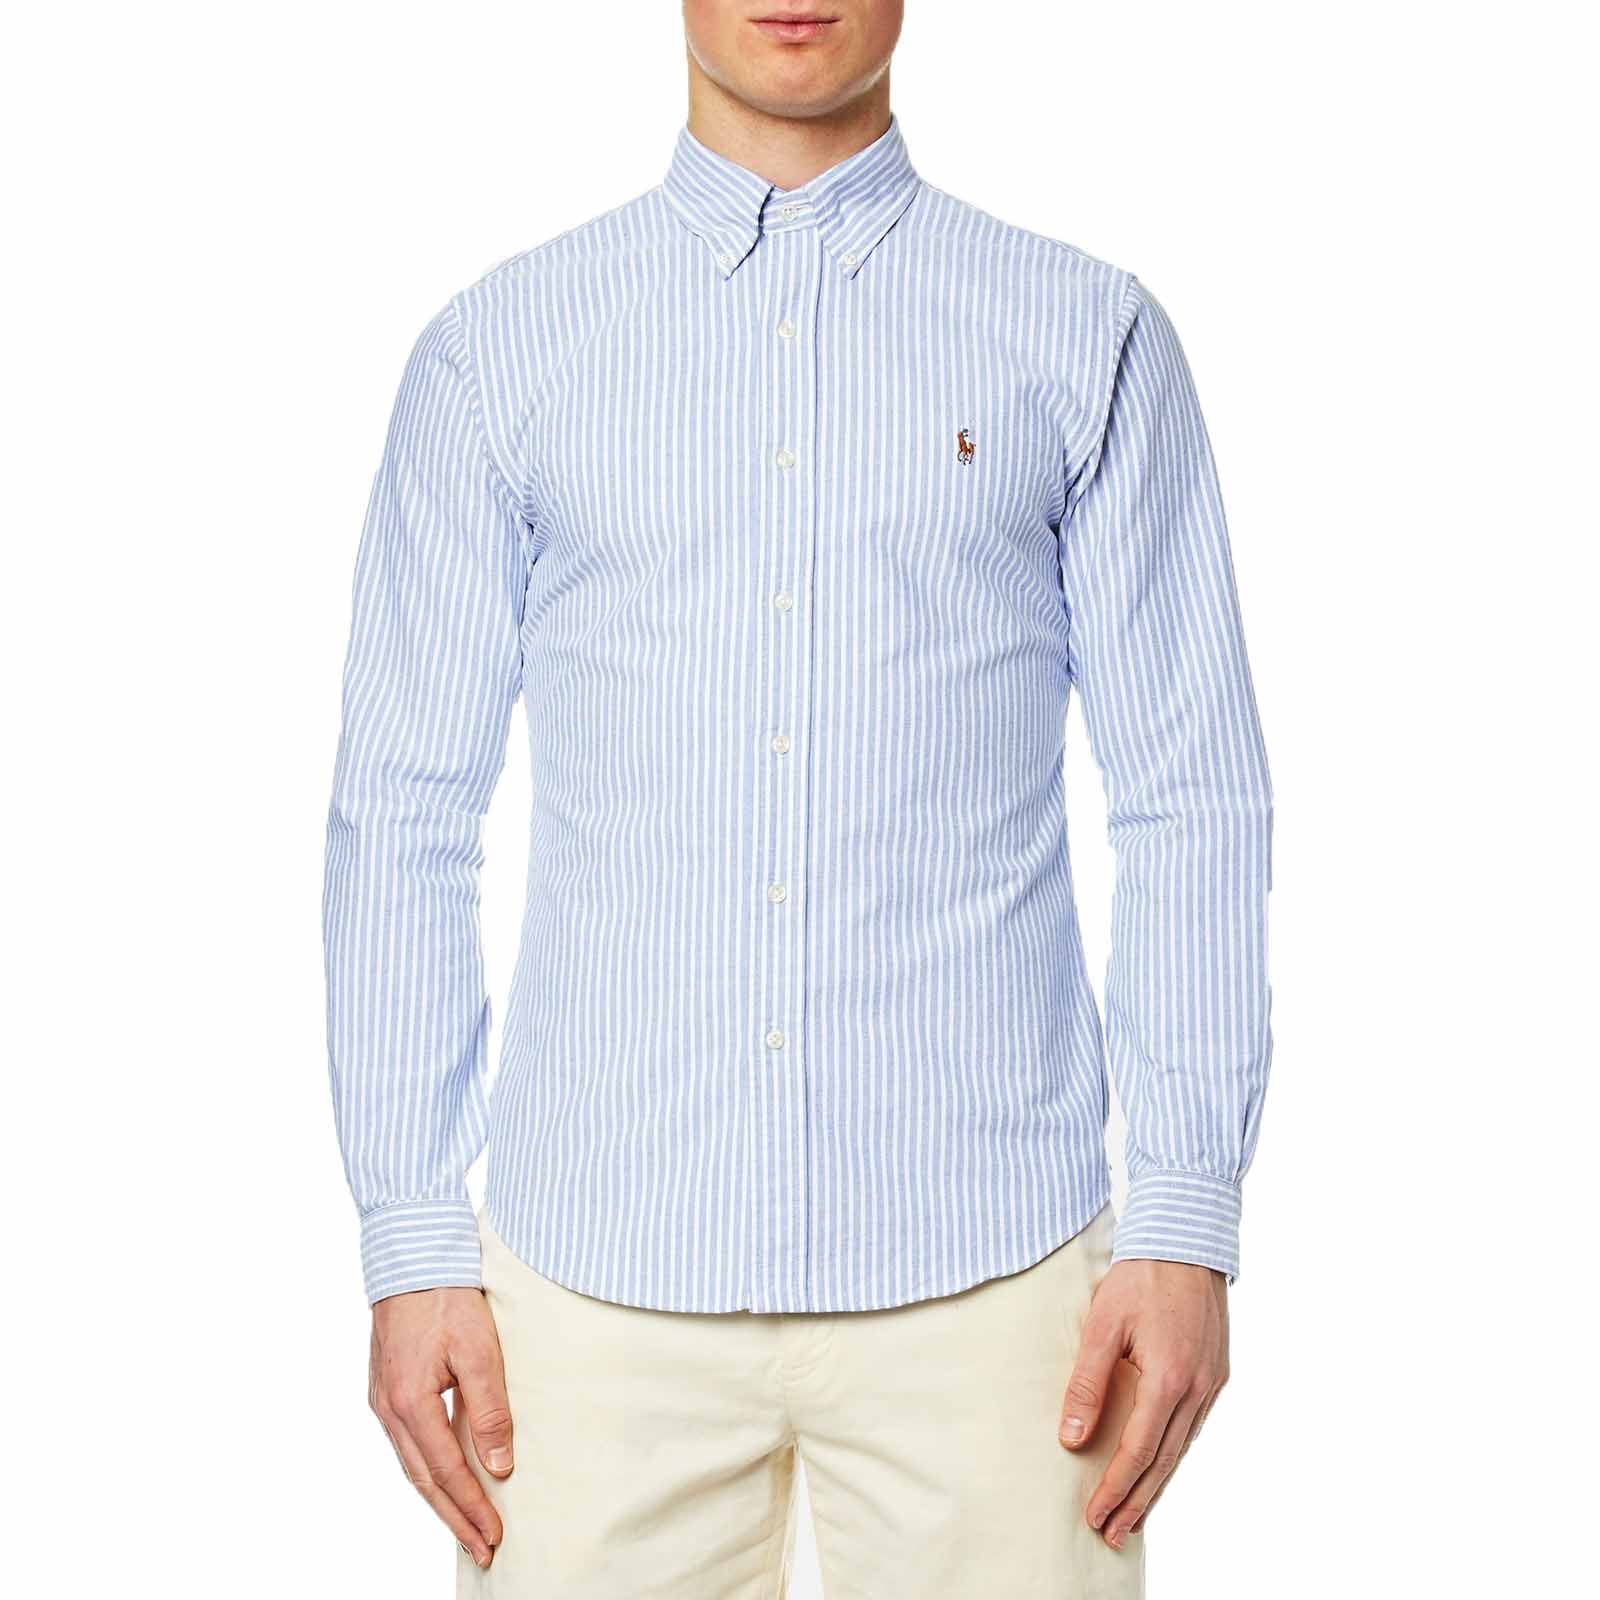 ralph lauren shirt blue and white